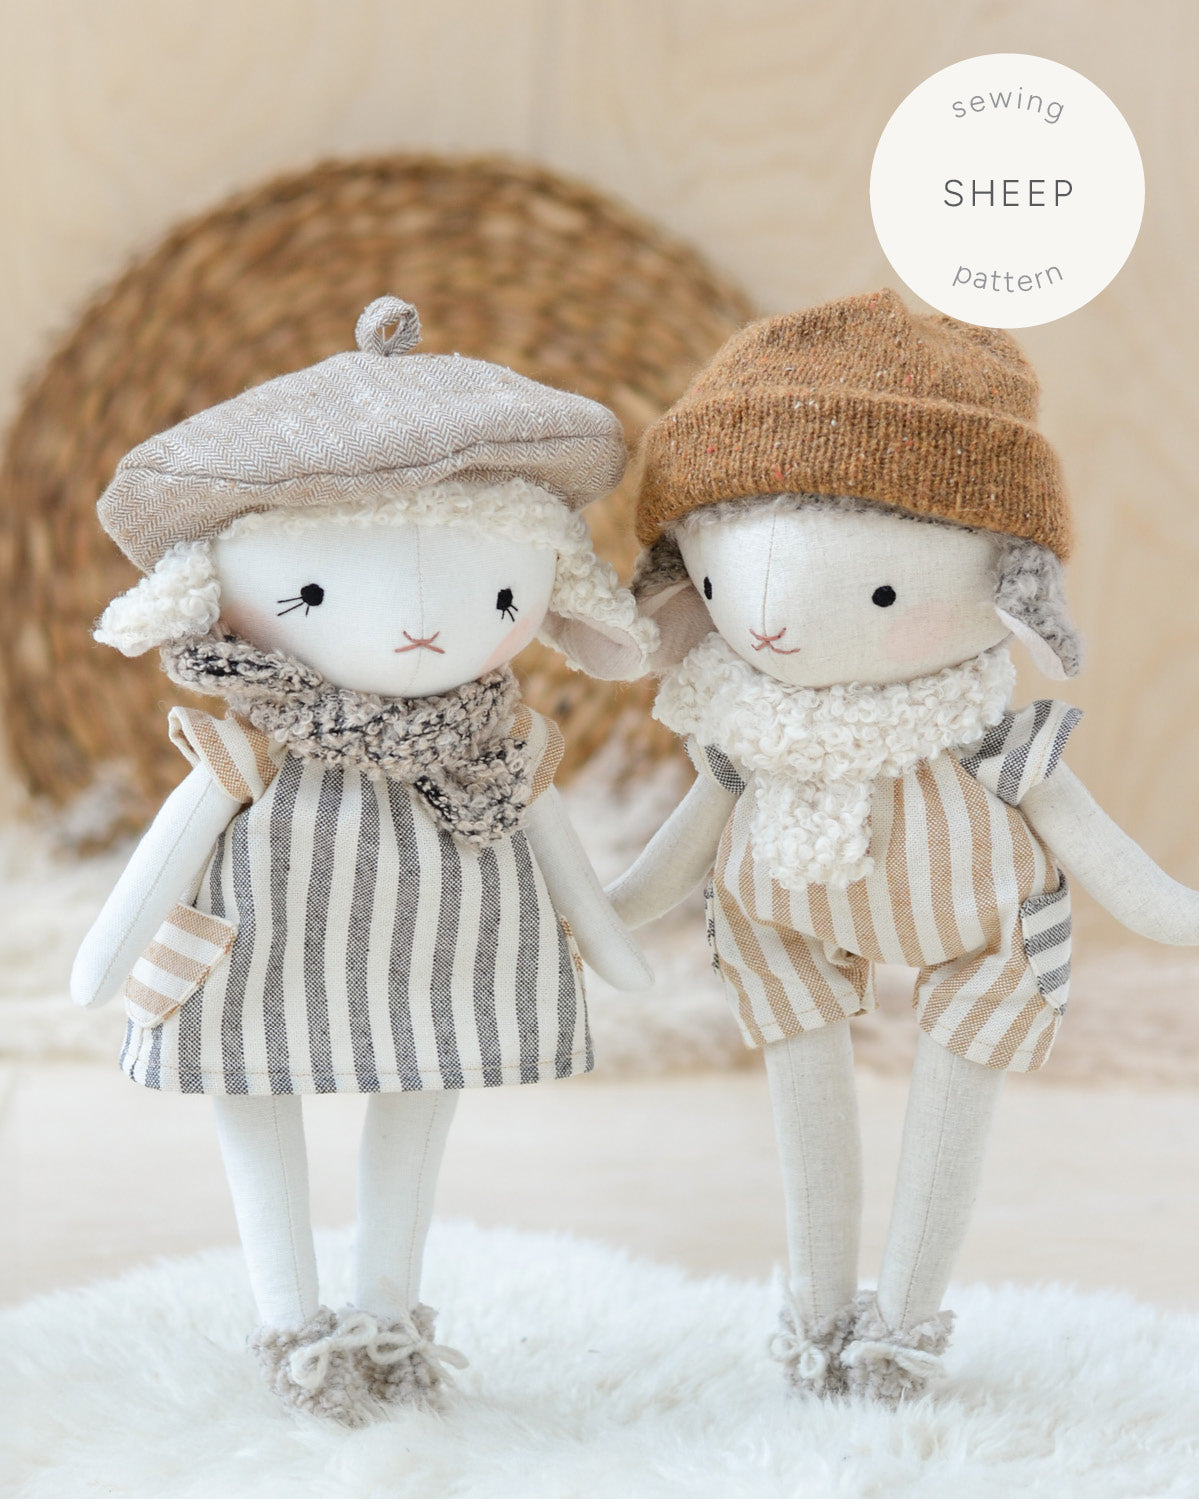 Sewing Pattern - Sheep doll